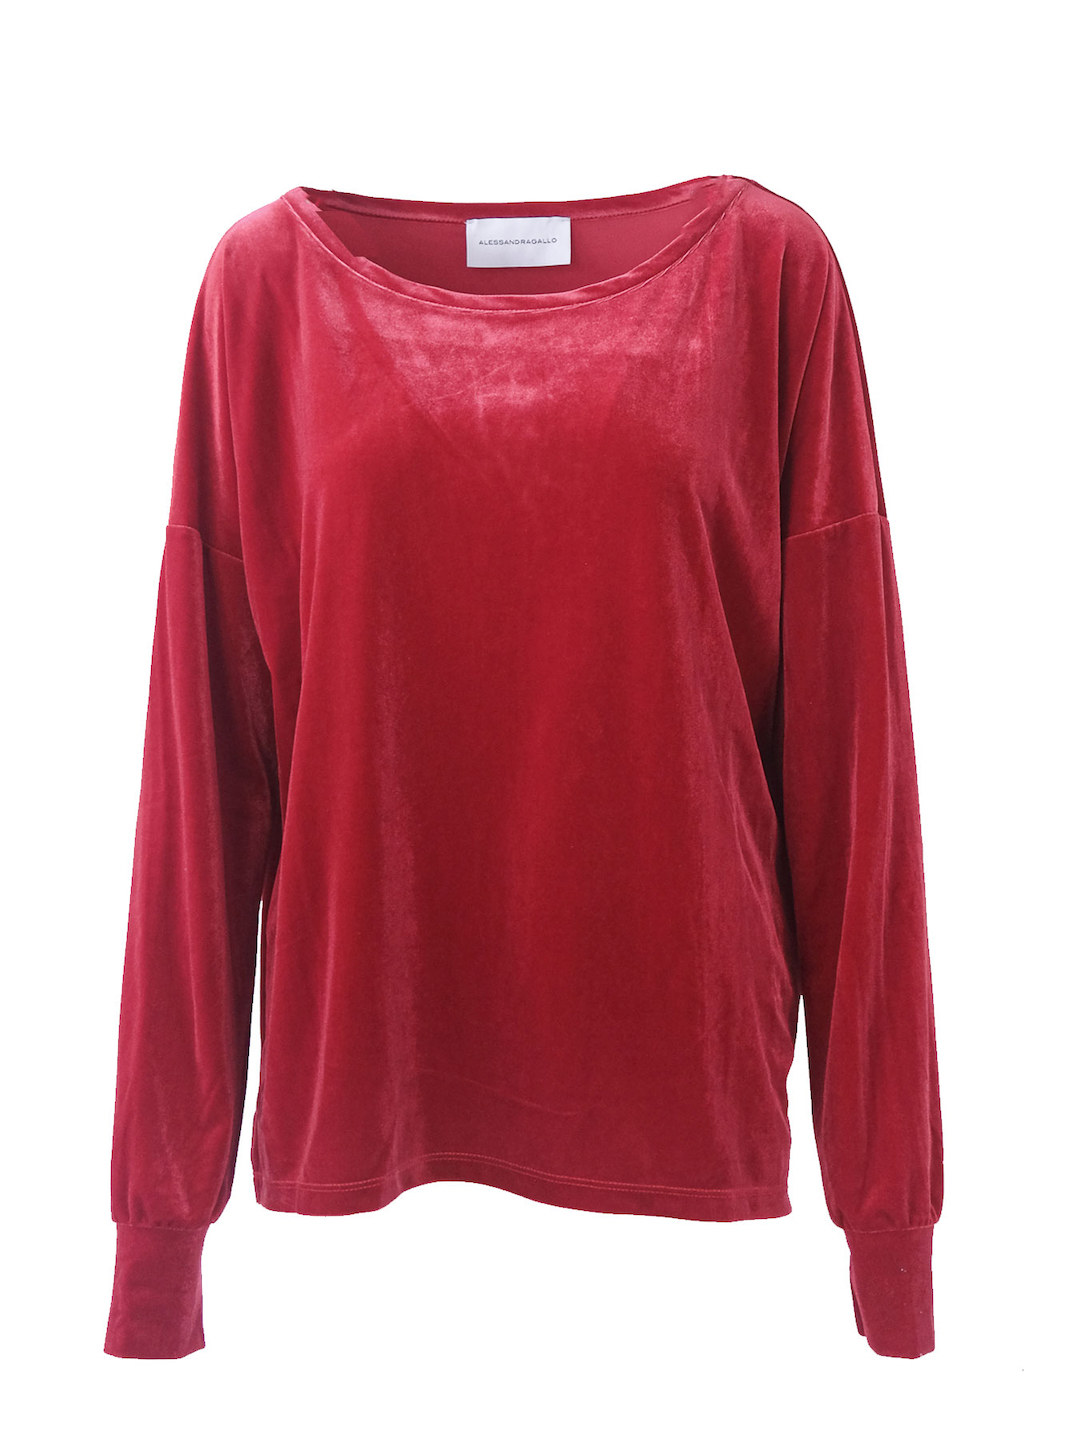 LAVINIA - red chenille sweatshirt